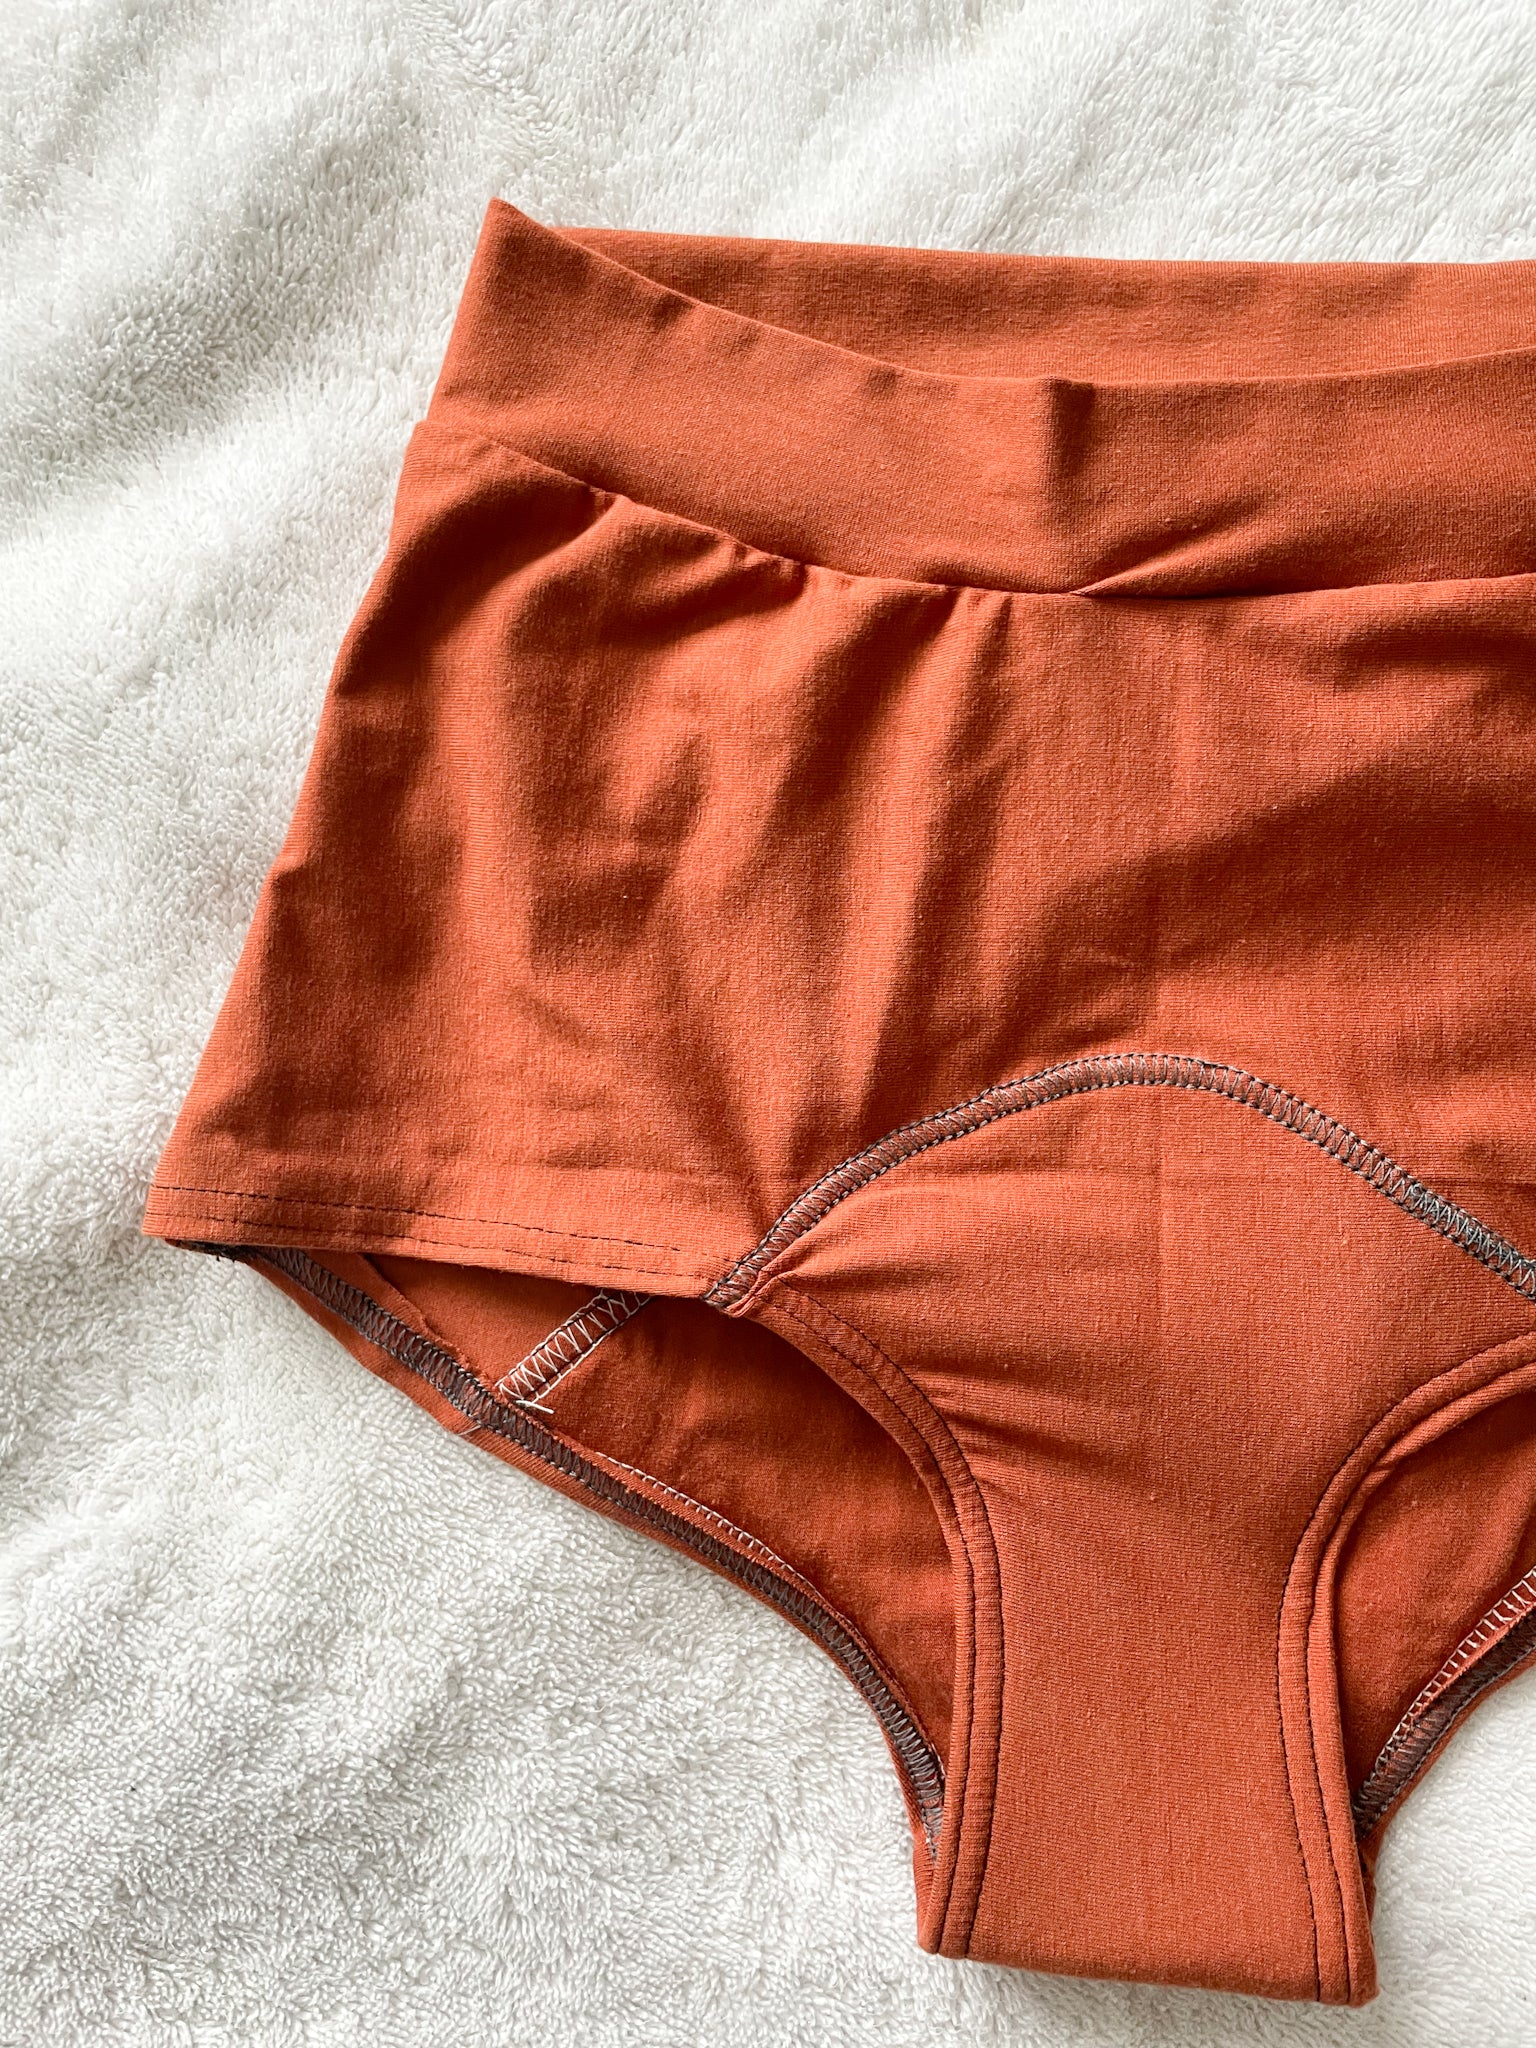 9128 MID Rise Bamboo Menstrual Briefs Absorbent Period Underwear